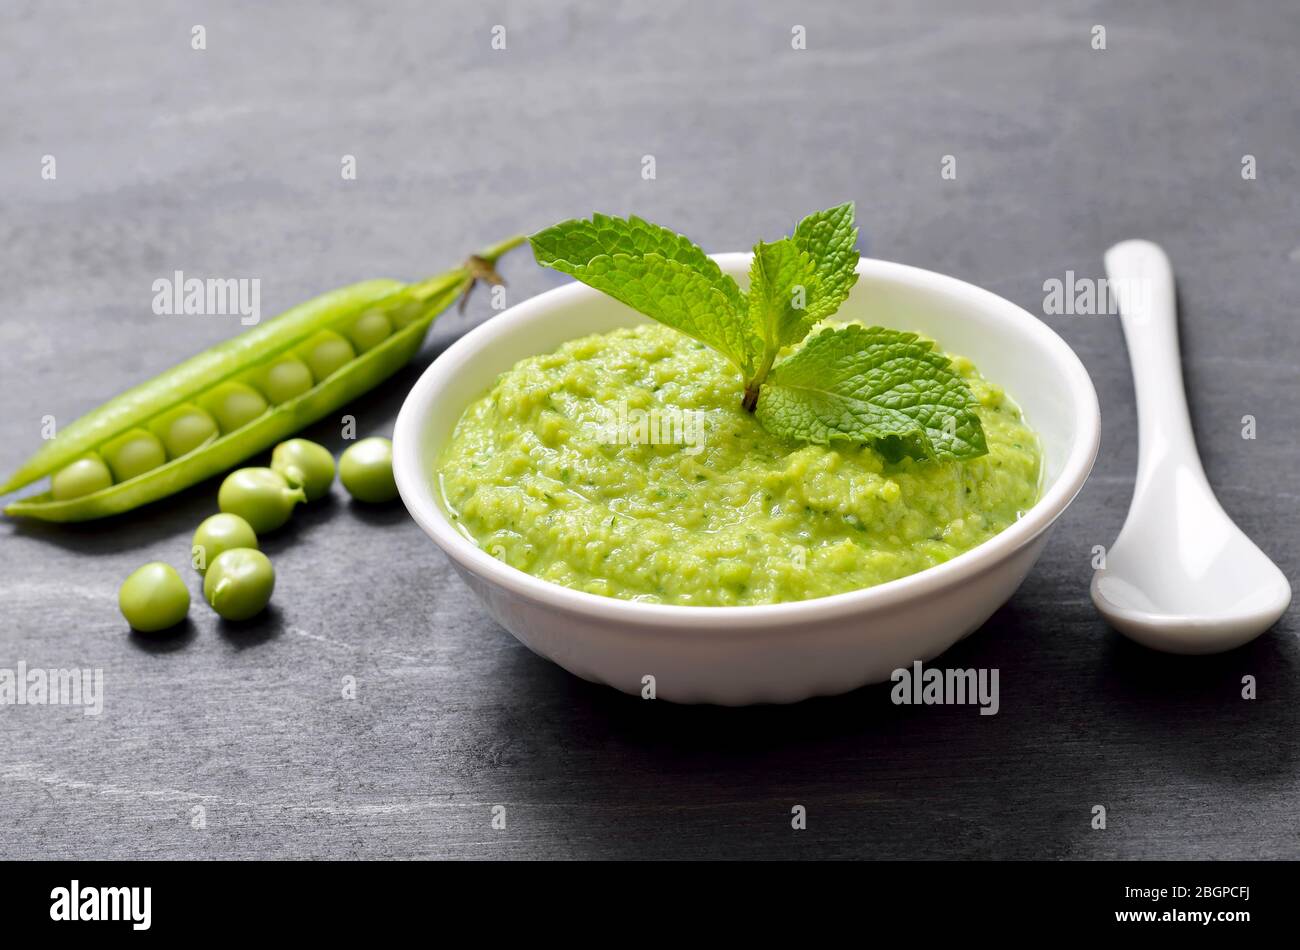 Homemade green pea puree in white bowl. Vegetarian food Stock Photo